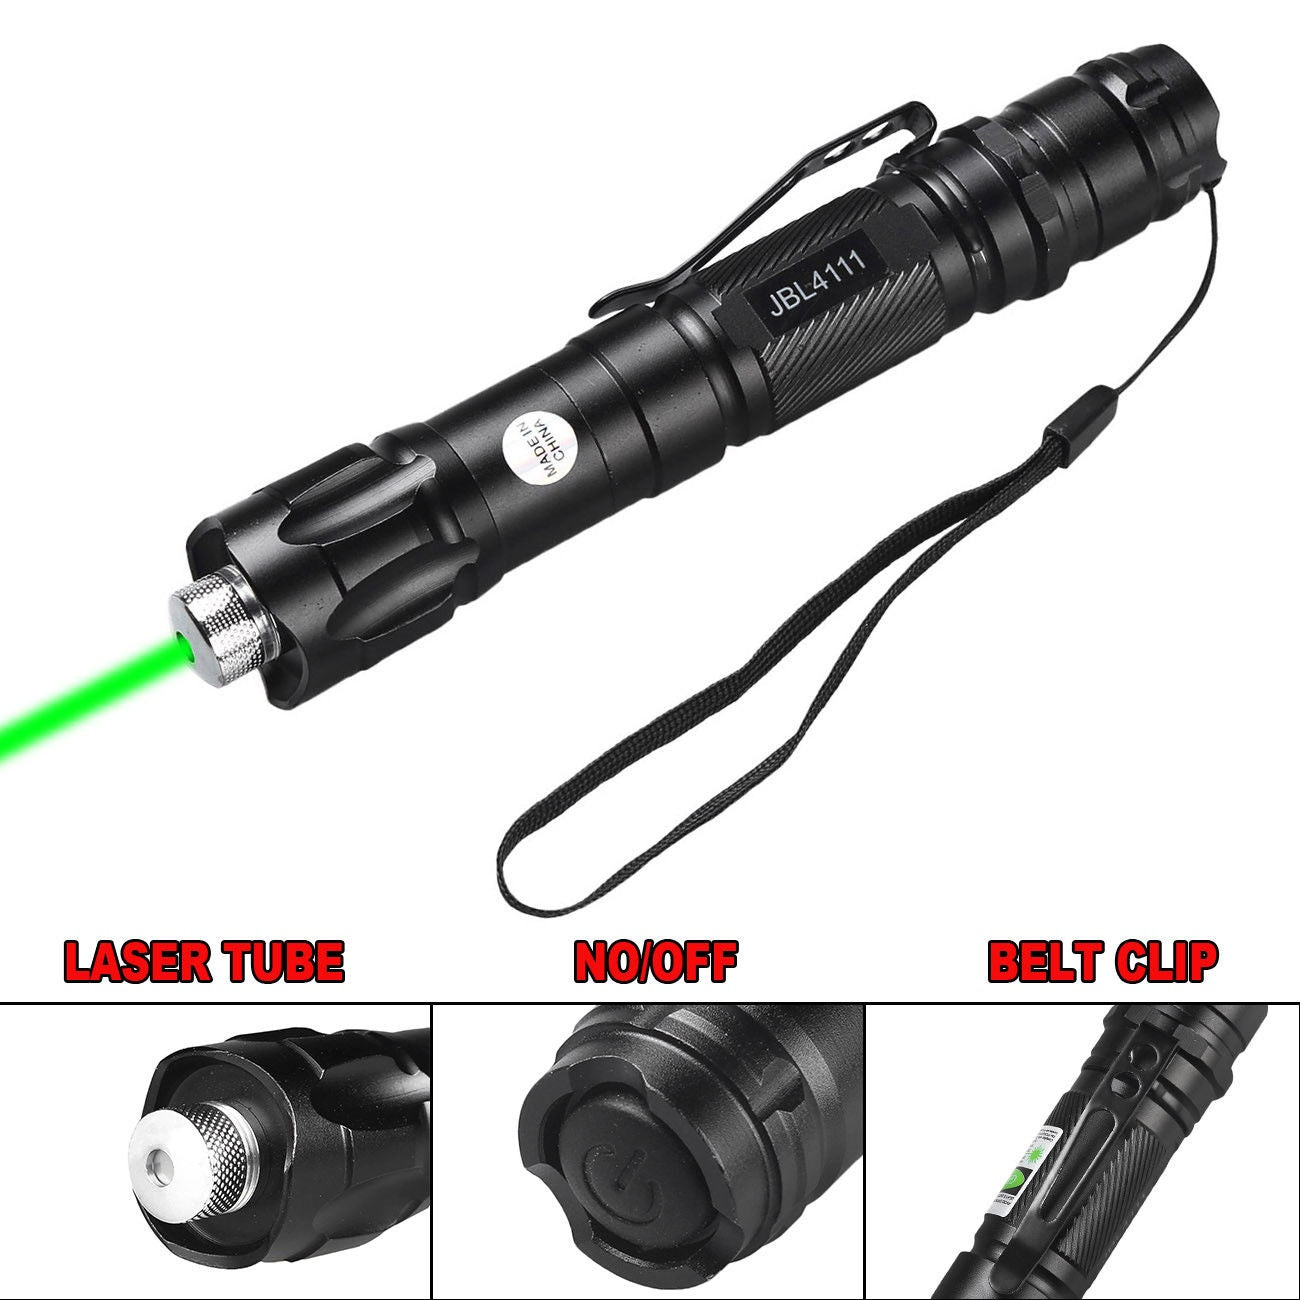 Military High Power 10Miles Green Laser Pointer Beam Lazer Pen + Star Cap + Battery + Charger